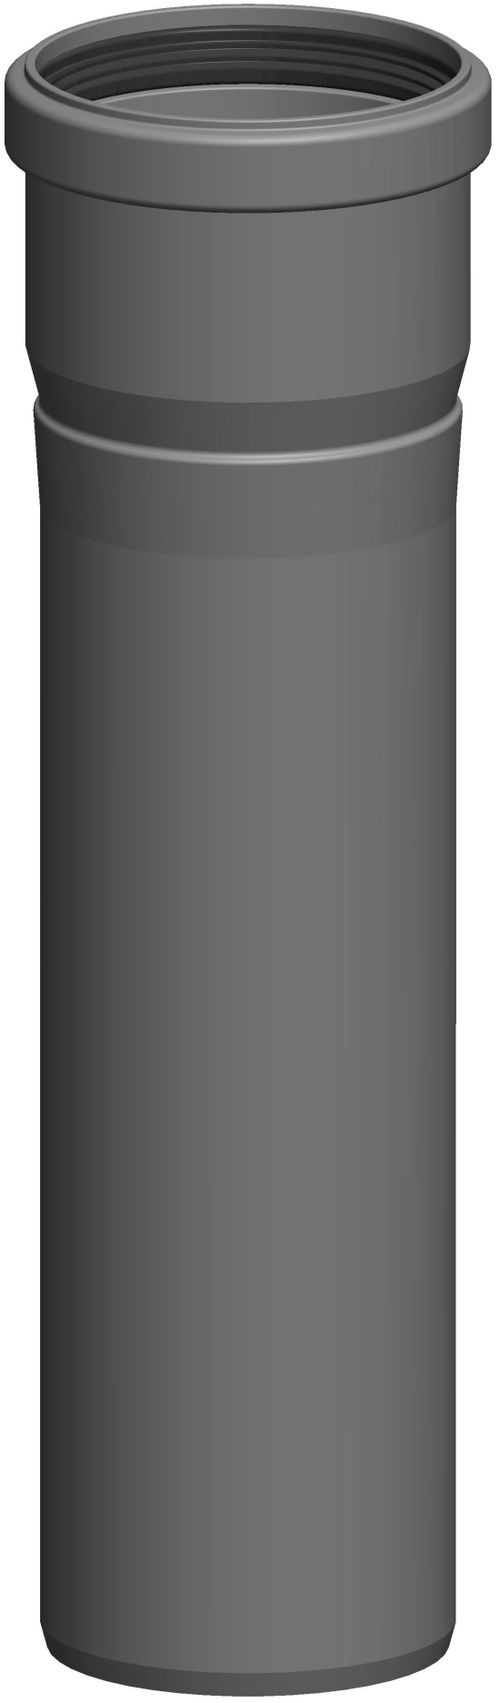 ATEC-Rohr-955mm-DN-80-kuerzbar-einwandig-1319